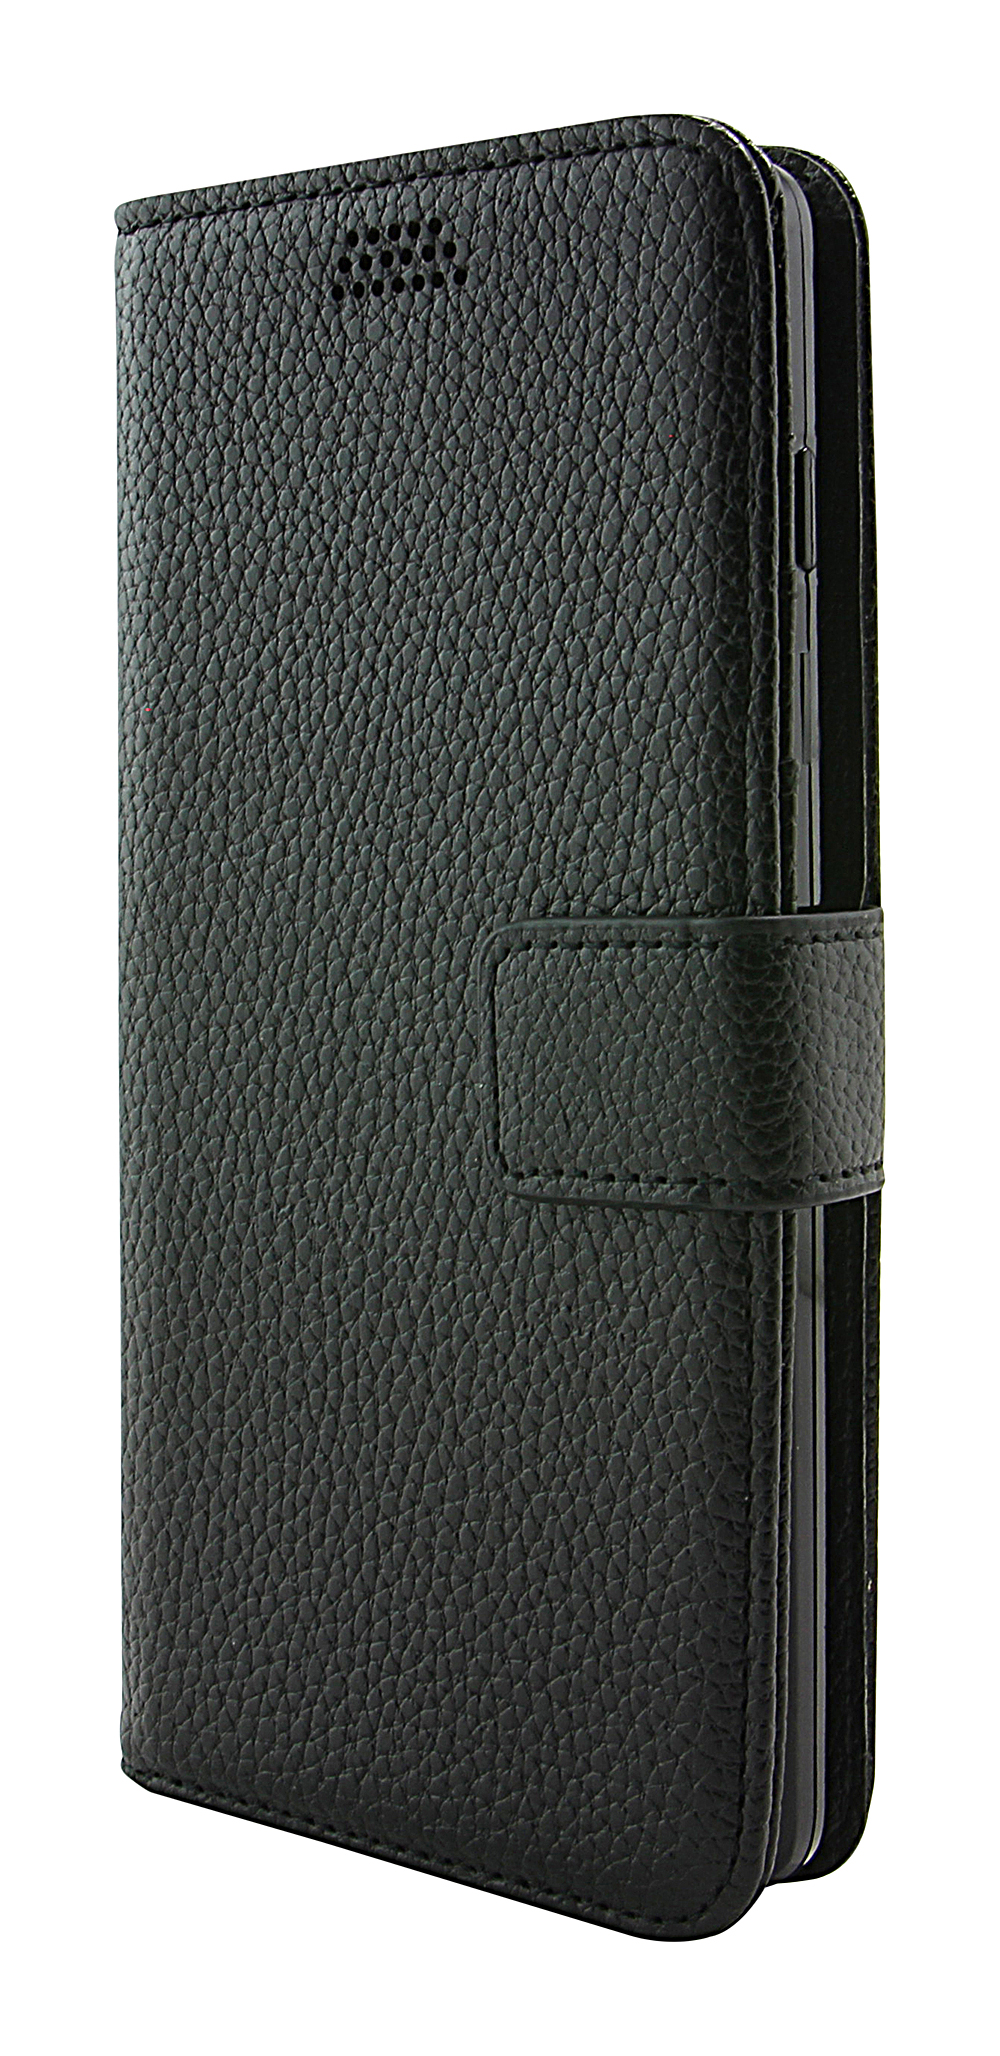 Standcase Wallet Samsung Galaxy Trend (S7560 & s7580)